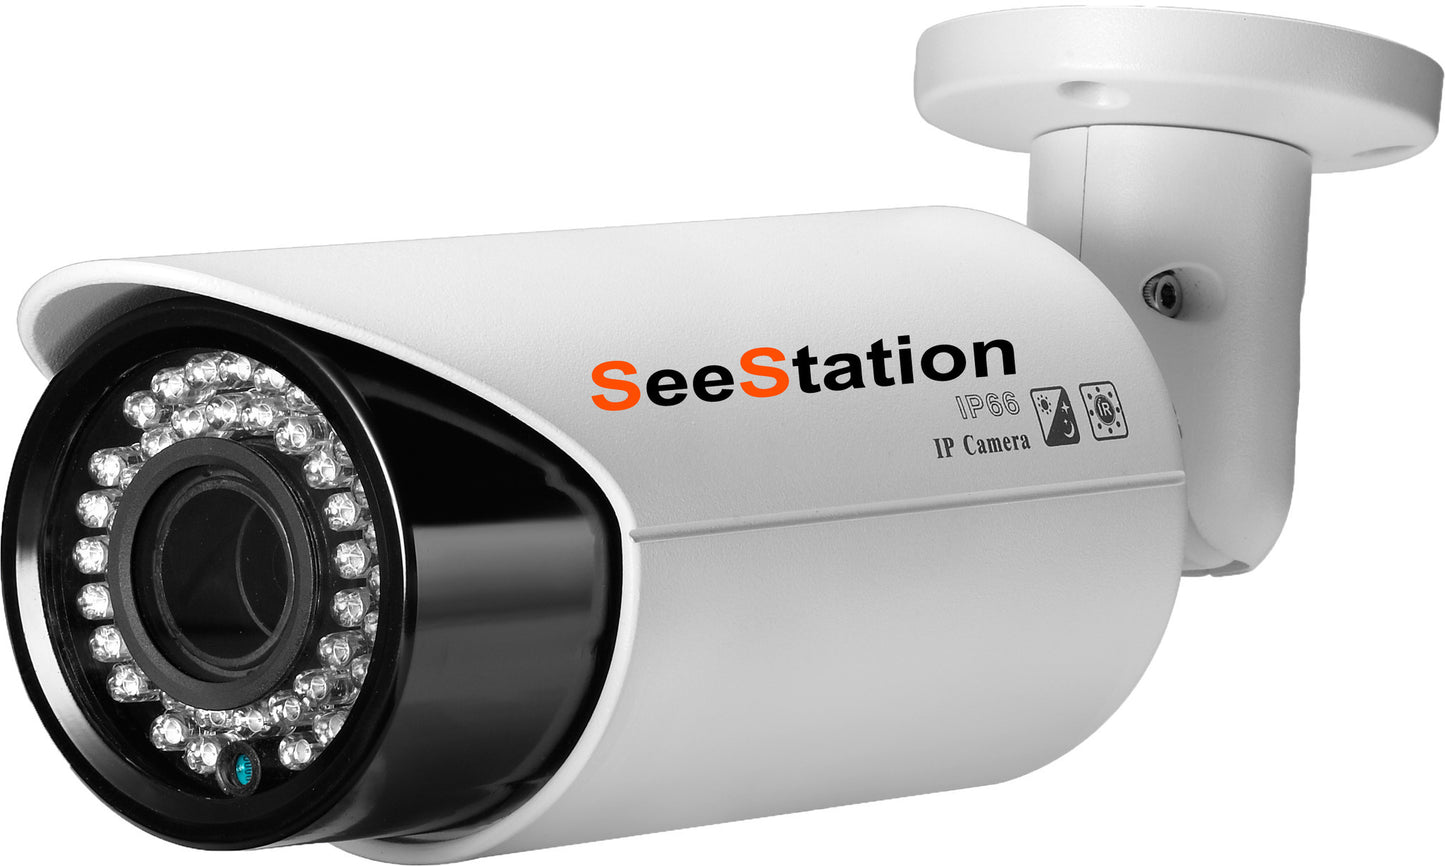 SeeStation (IP) CIP1220V-8W IP Bullet Camera 4MP IR POE ONVIF 2.8-12mm Varifocal HD Lens